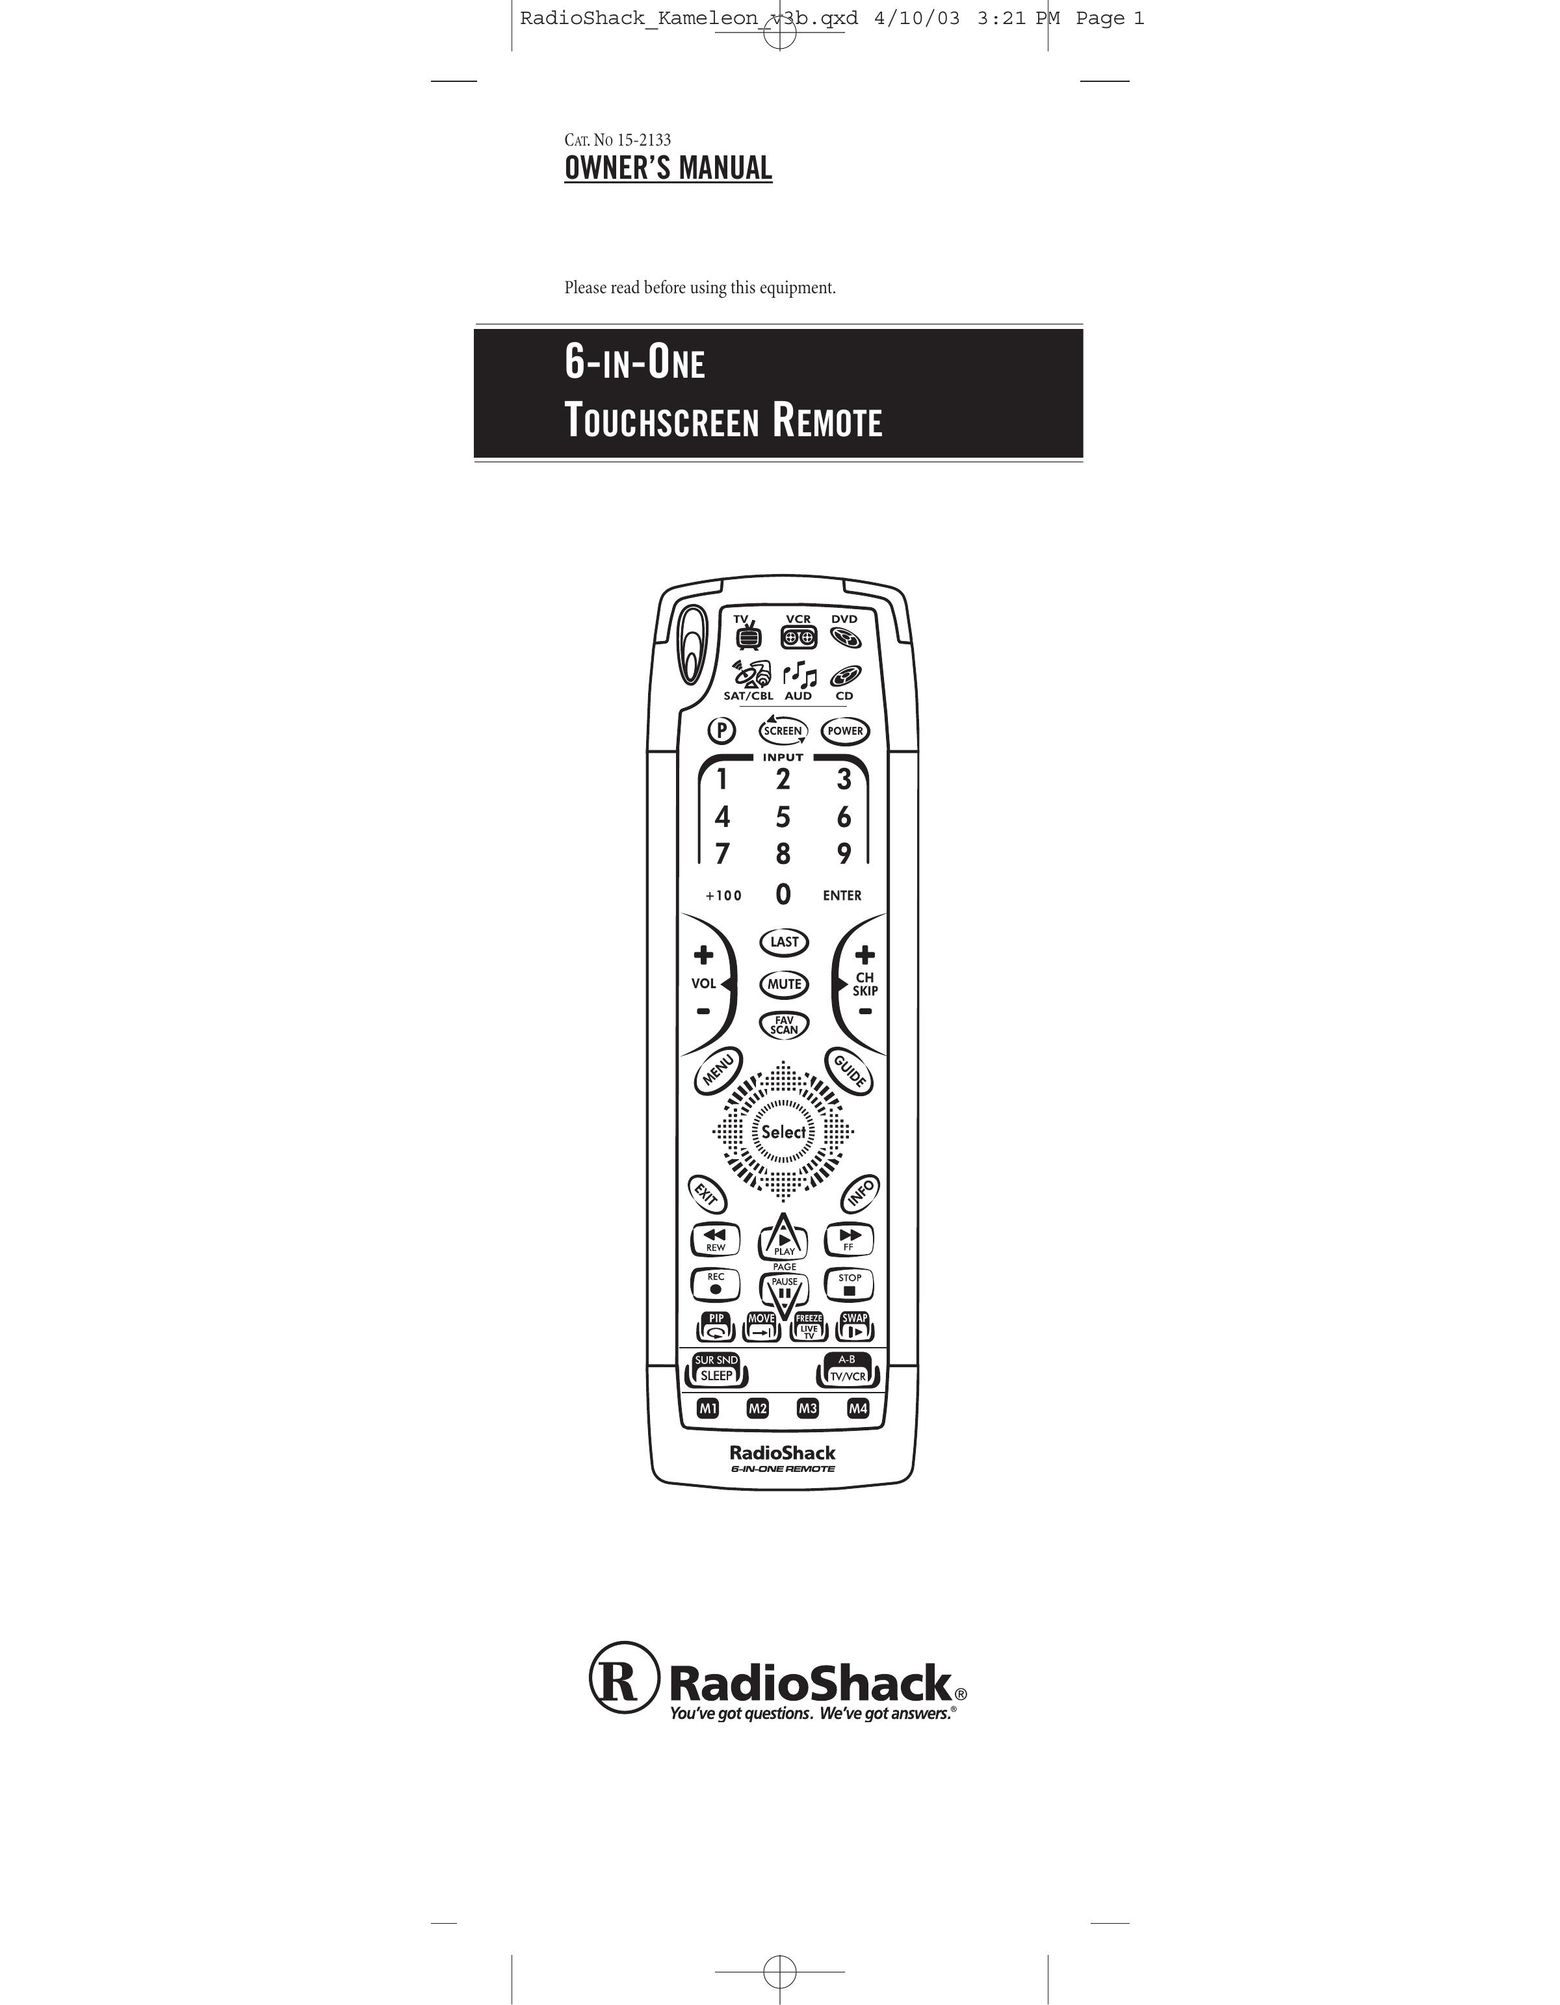 Radio Shack TOUCHSCREEN REMOTE Universal Remote User Manual